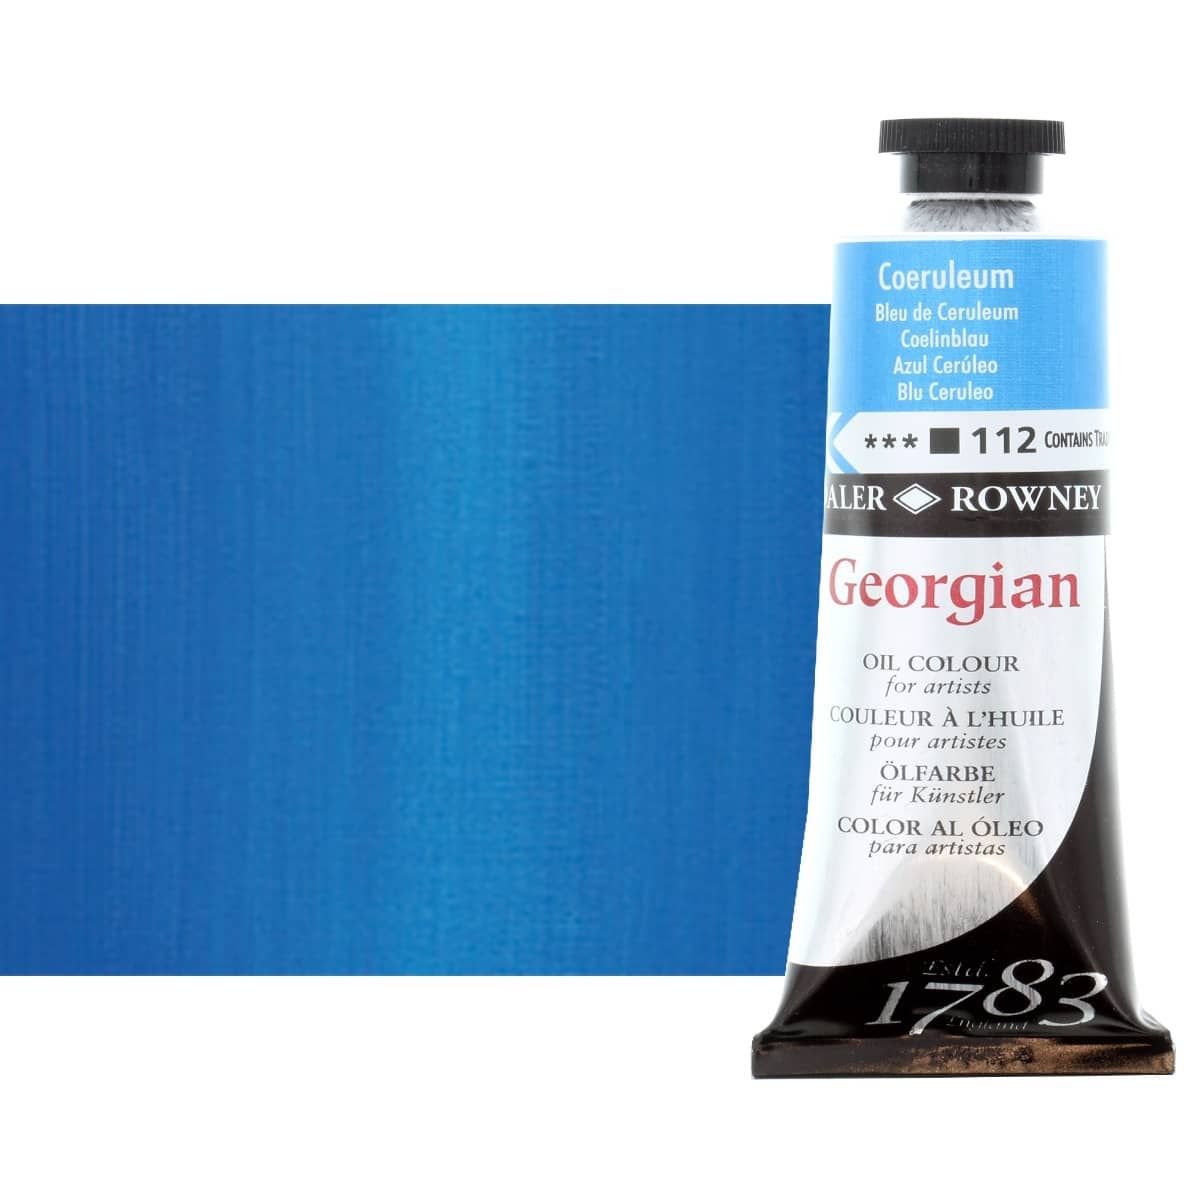 Daler-Rowney Georgian Oil Color 75ml Tube - Coeruleum Blue